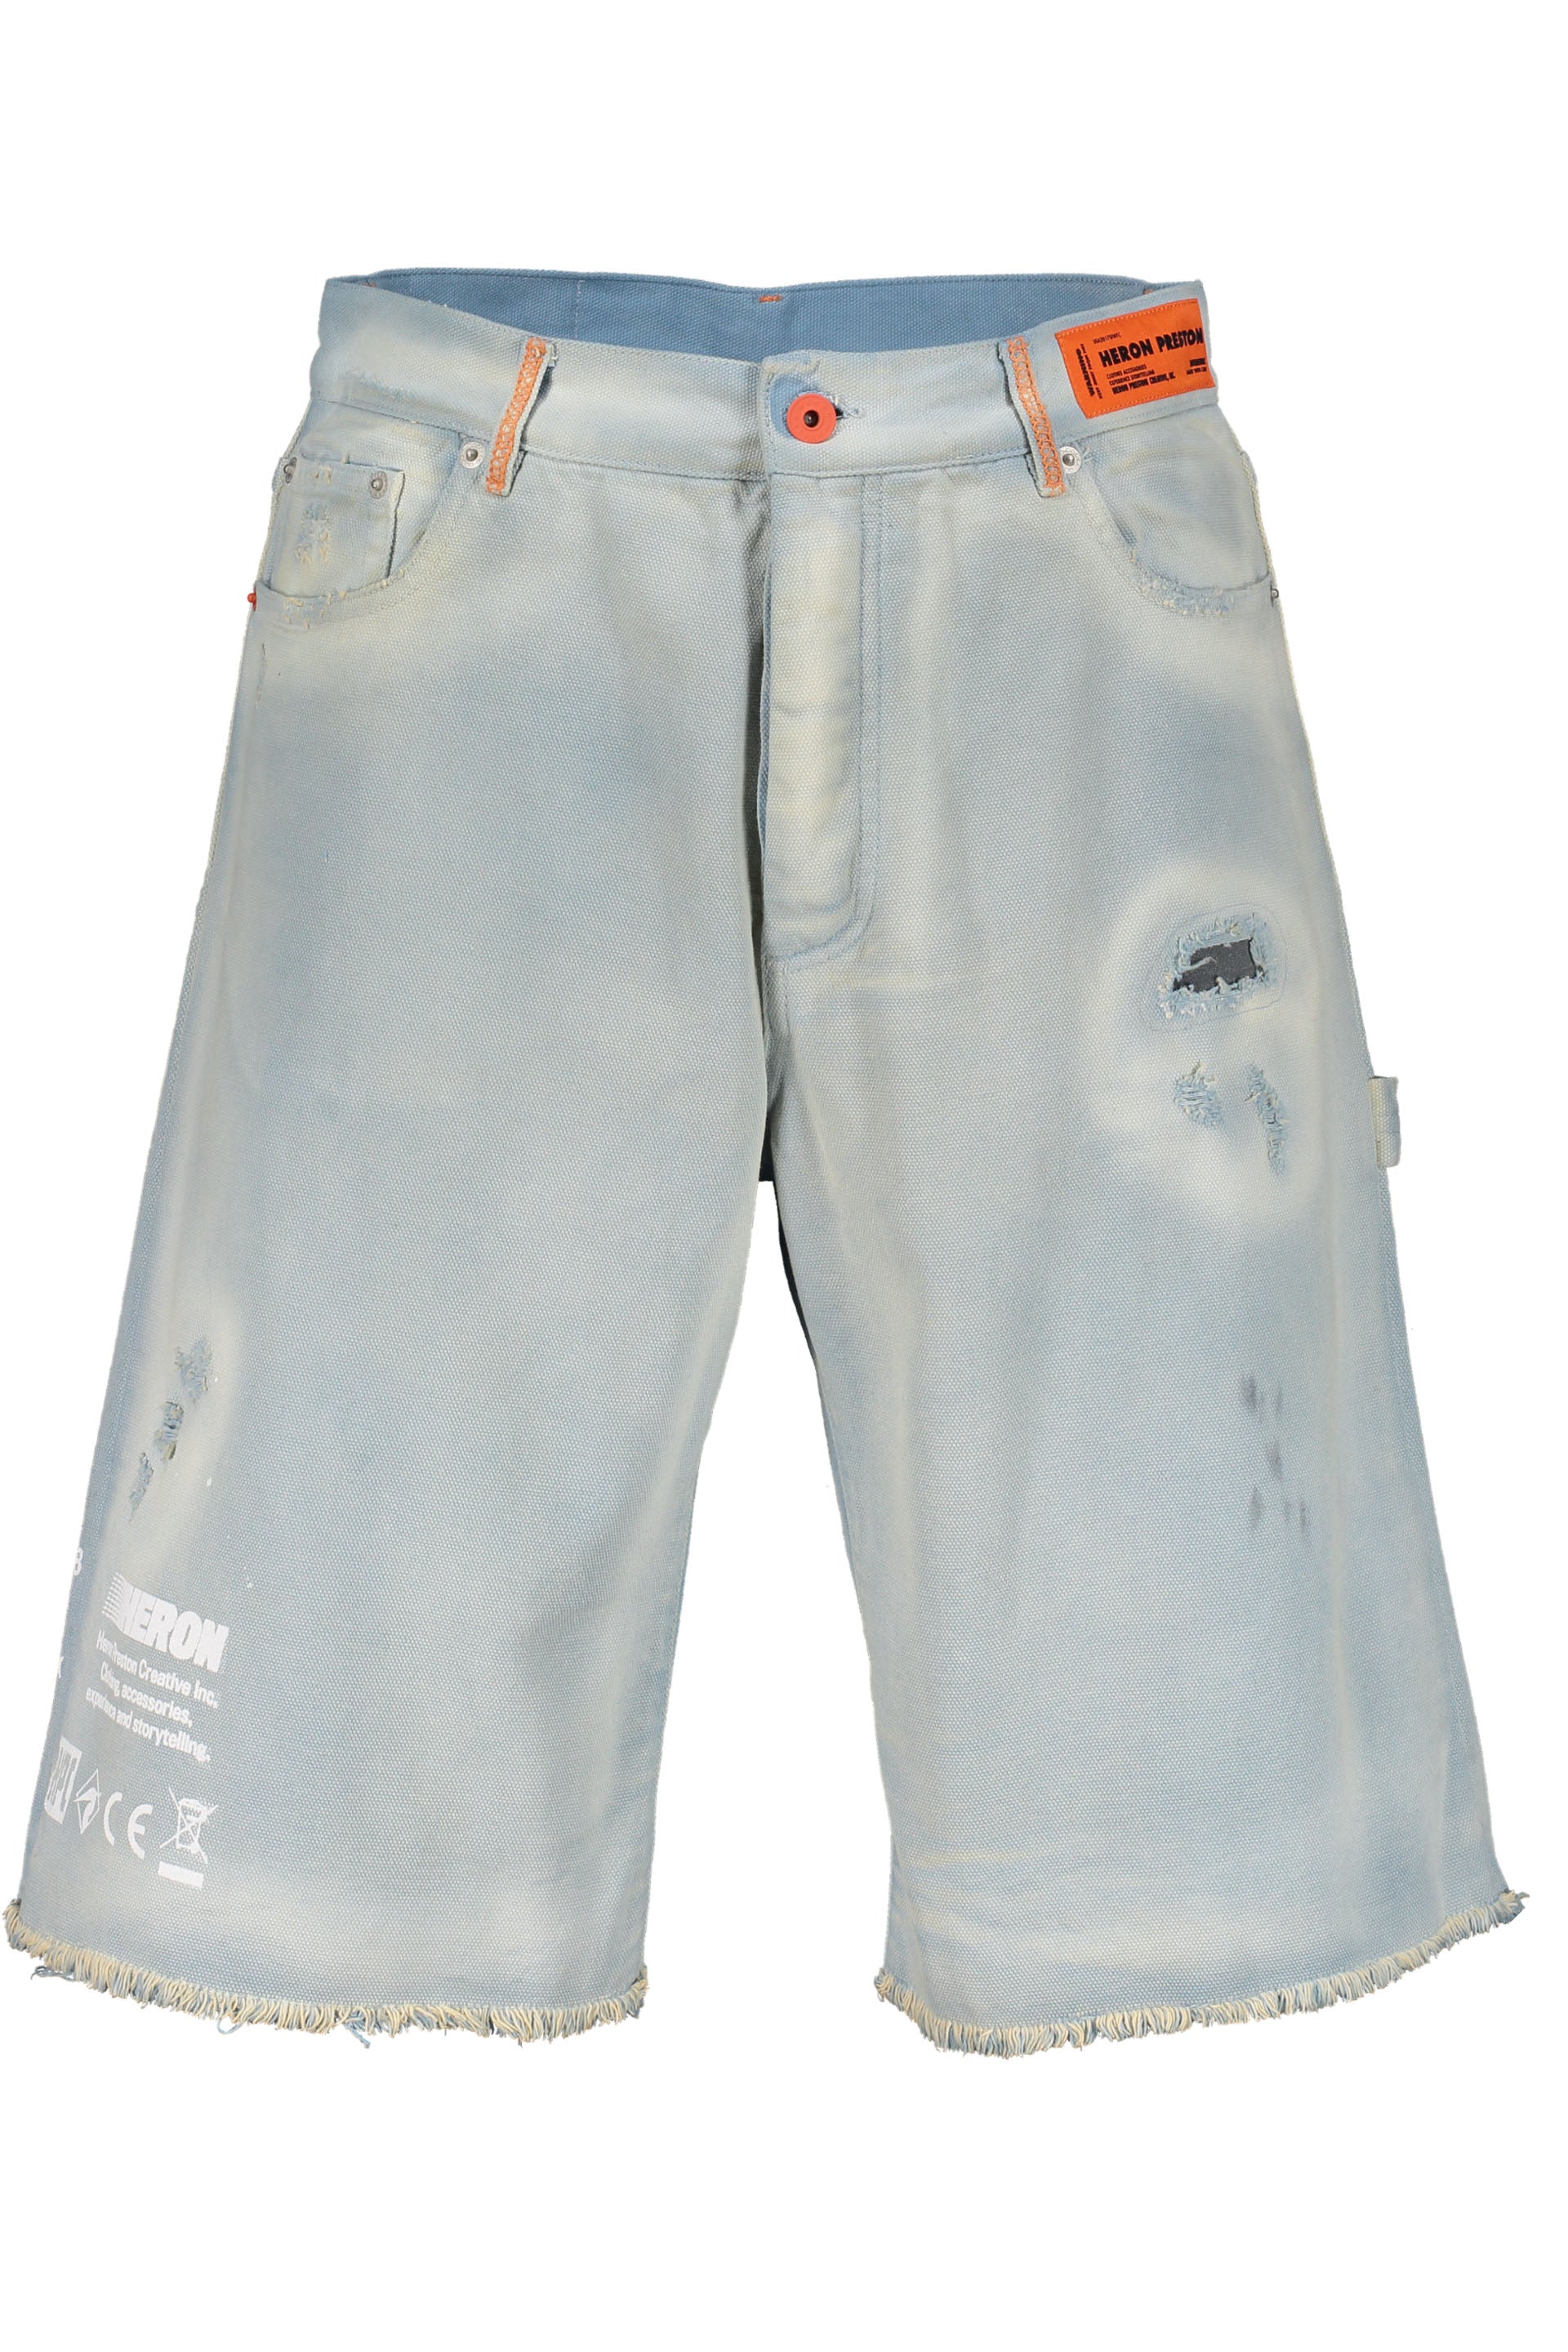 Denim shorts-Bekleidung Short-Heron Preston-OUTLET-SALE-30-ARCHIVIST